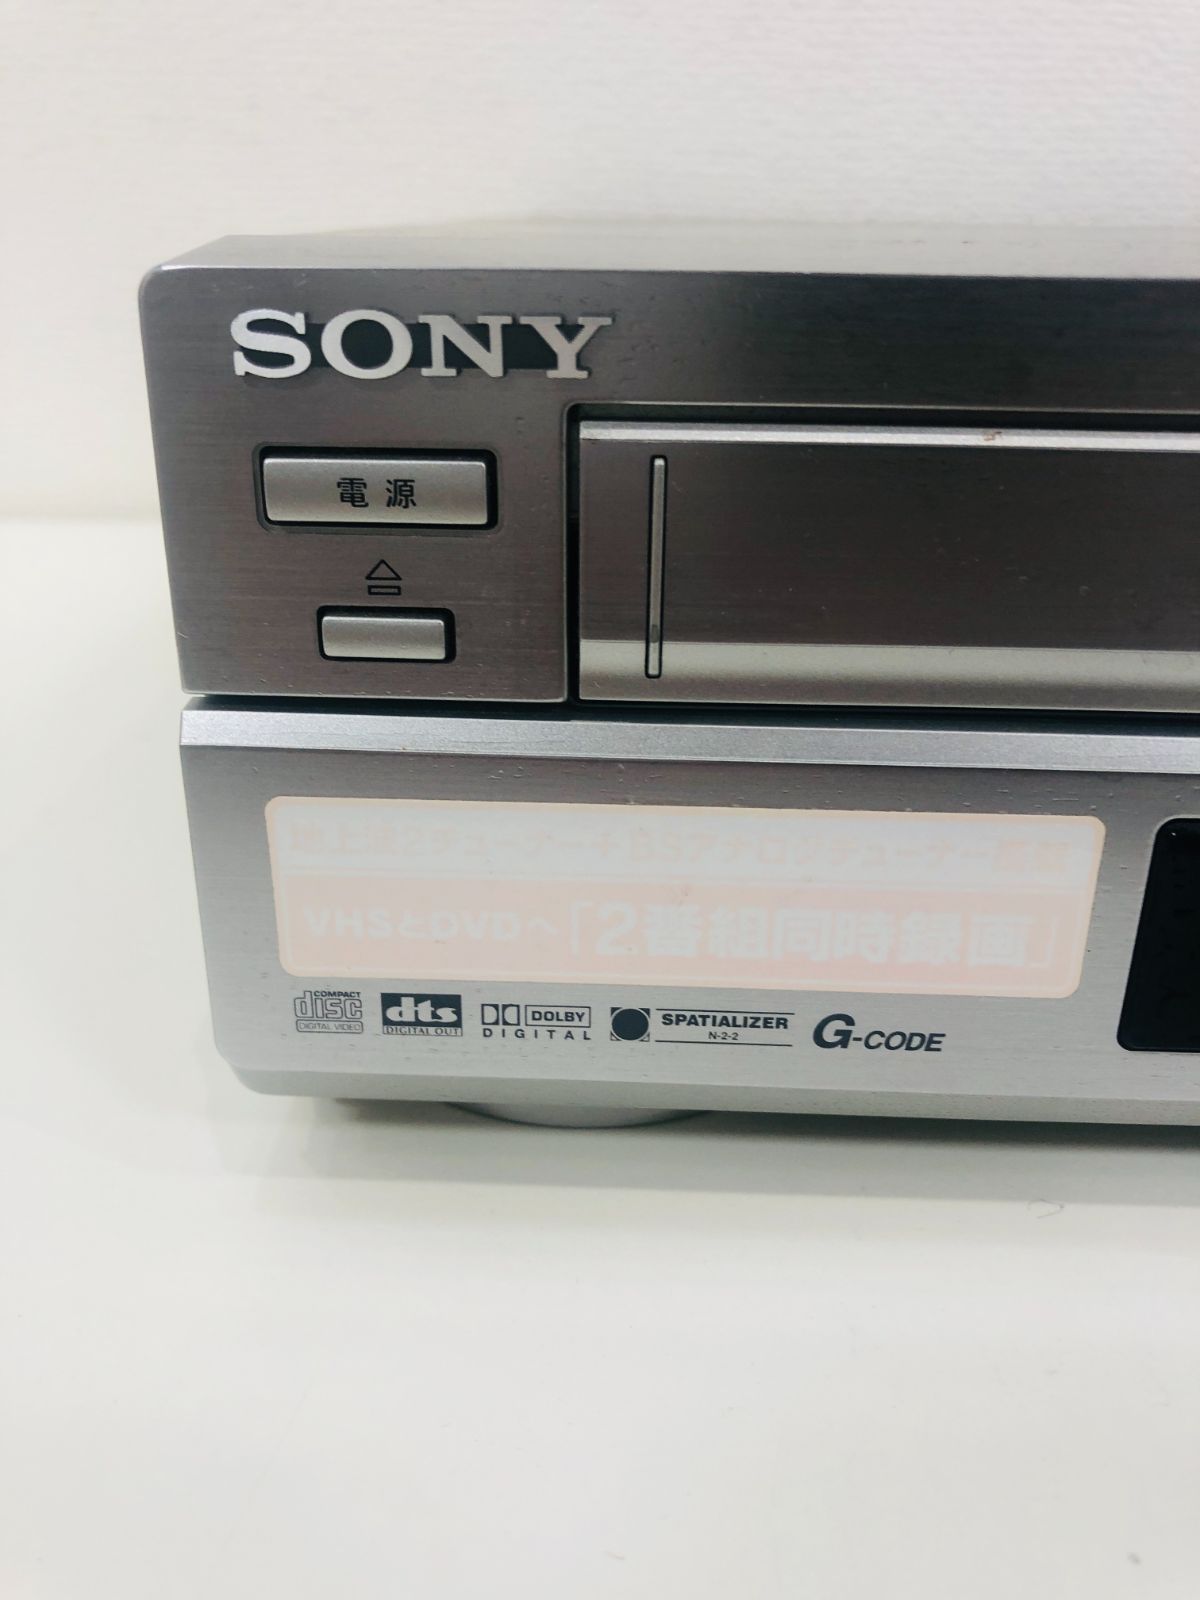 A【中古】DVD/VHS一体型レコーダー SONY ソニー RDR-VD60 動作OK